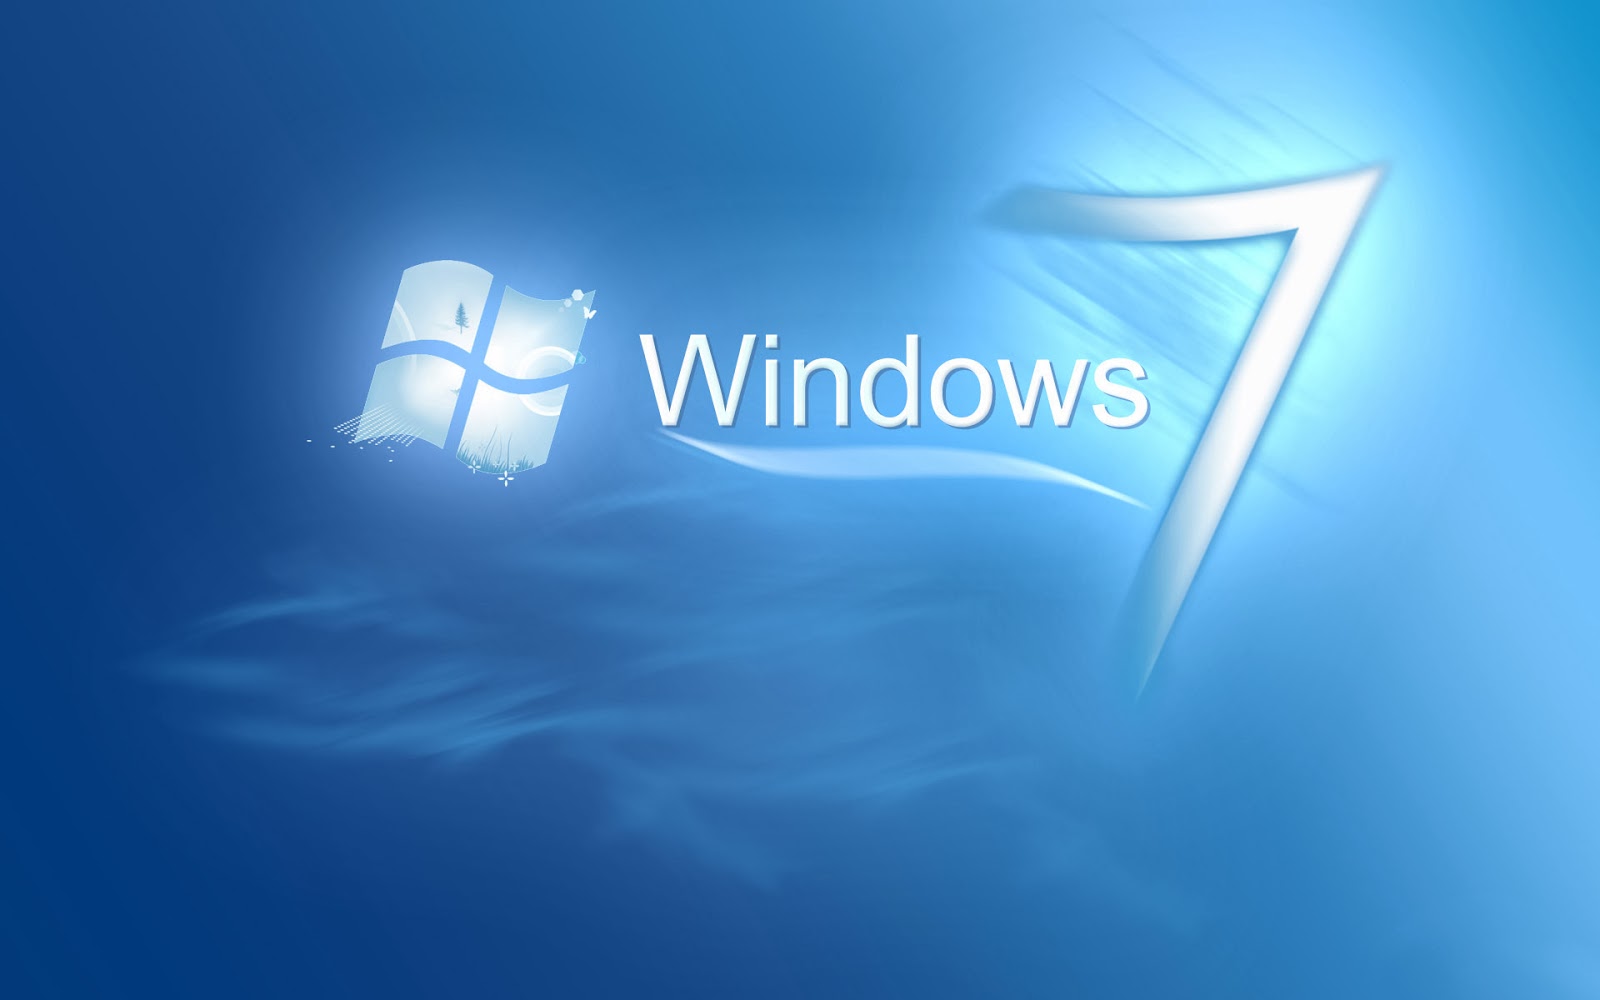 window7 operating system